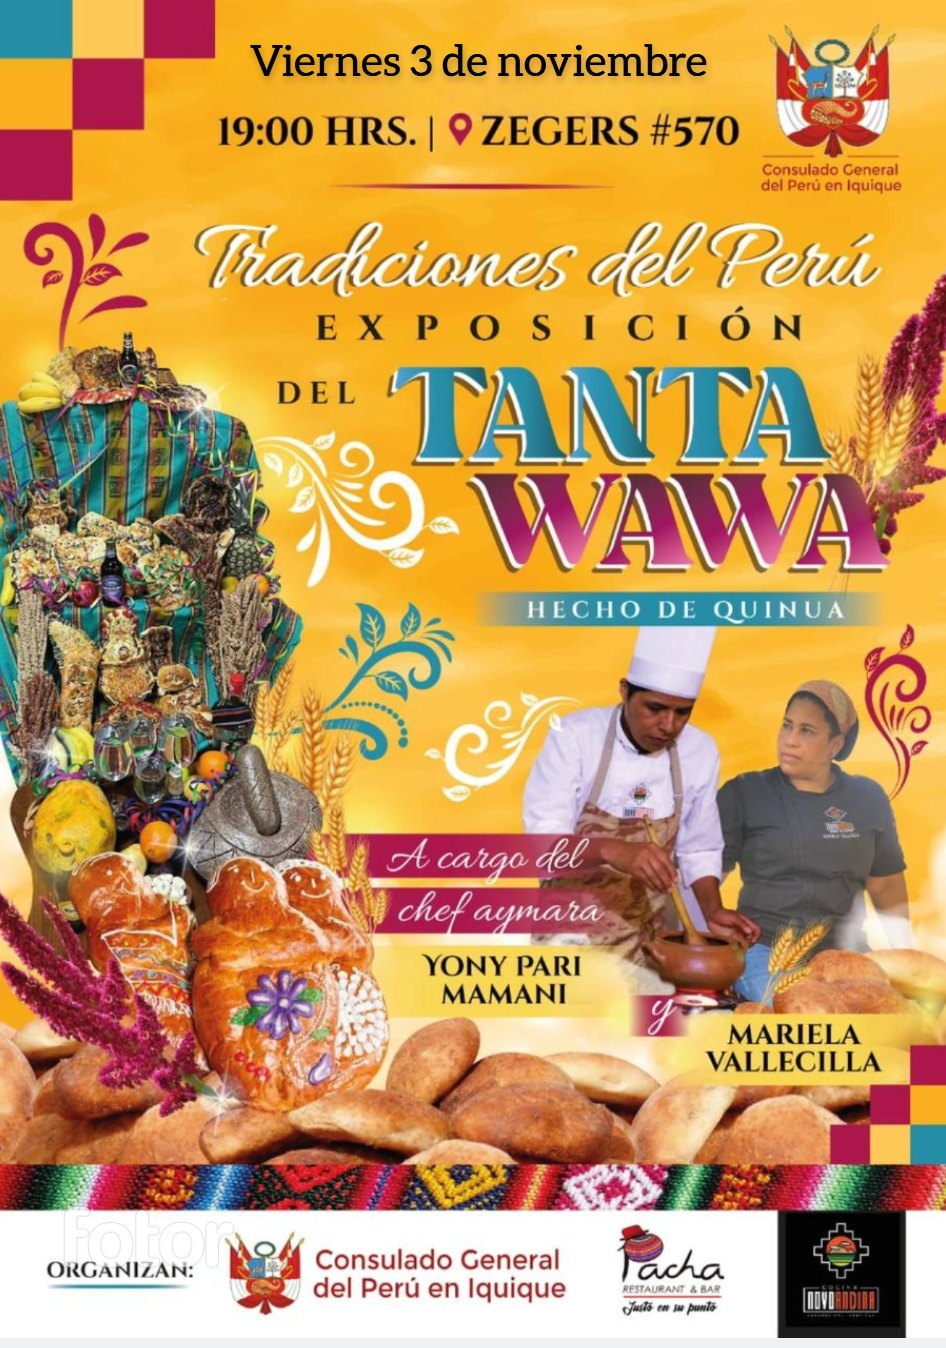 Exposicion del Tanta Wawa